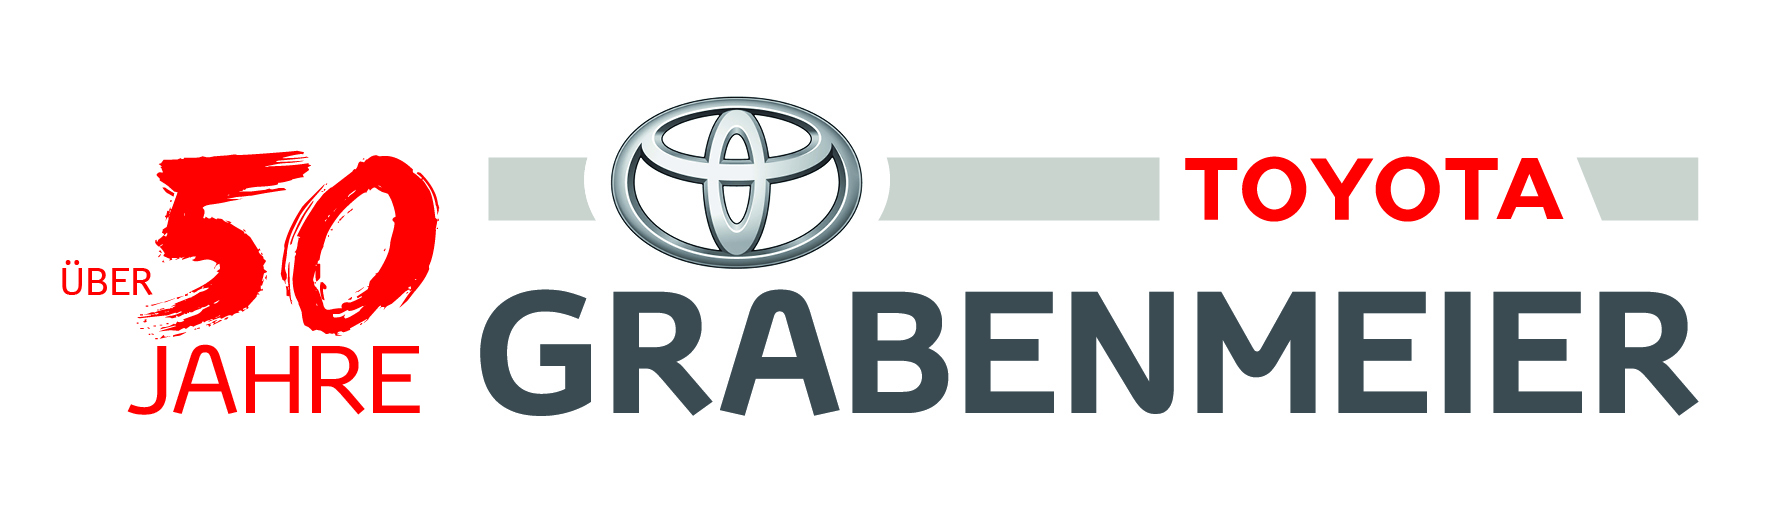 Toyota Grabenmeier Logo